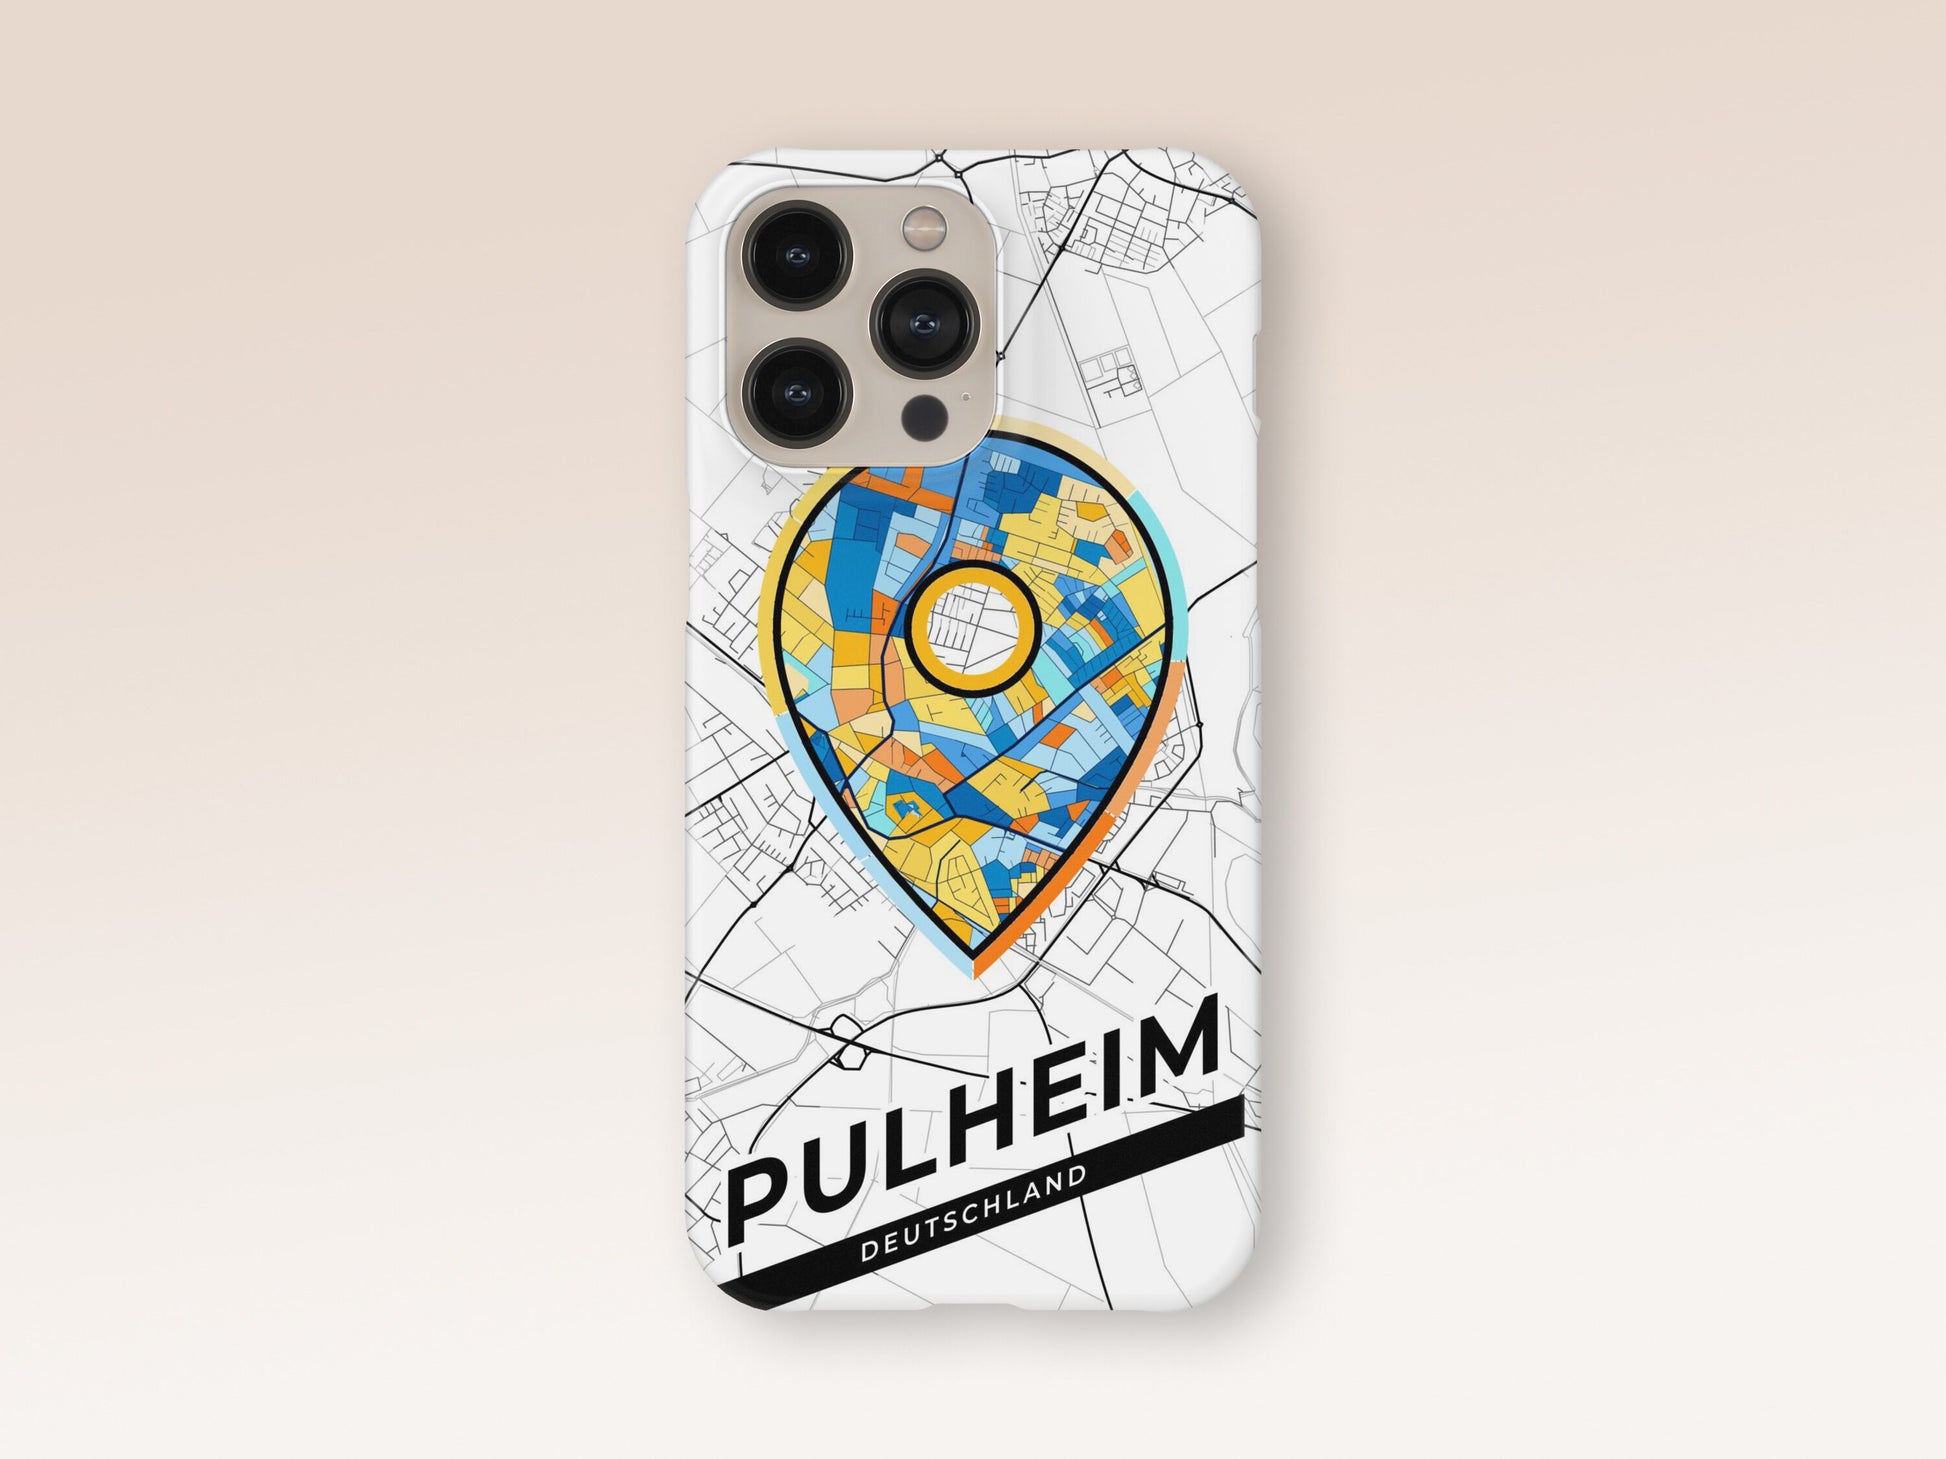 Pulheim Deutschland slim phone case with colorful icon. Birthday, wedding or housewarming gift. Couple match cases. 1